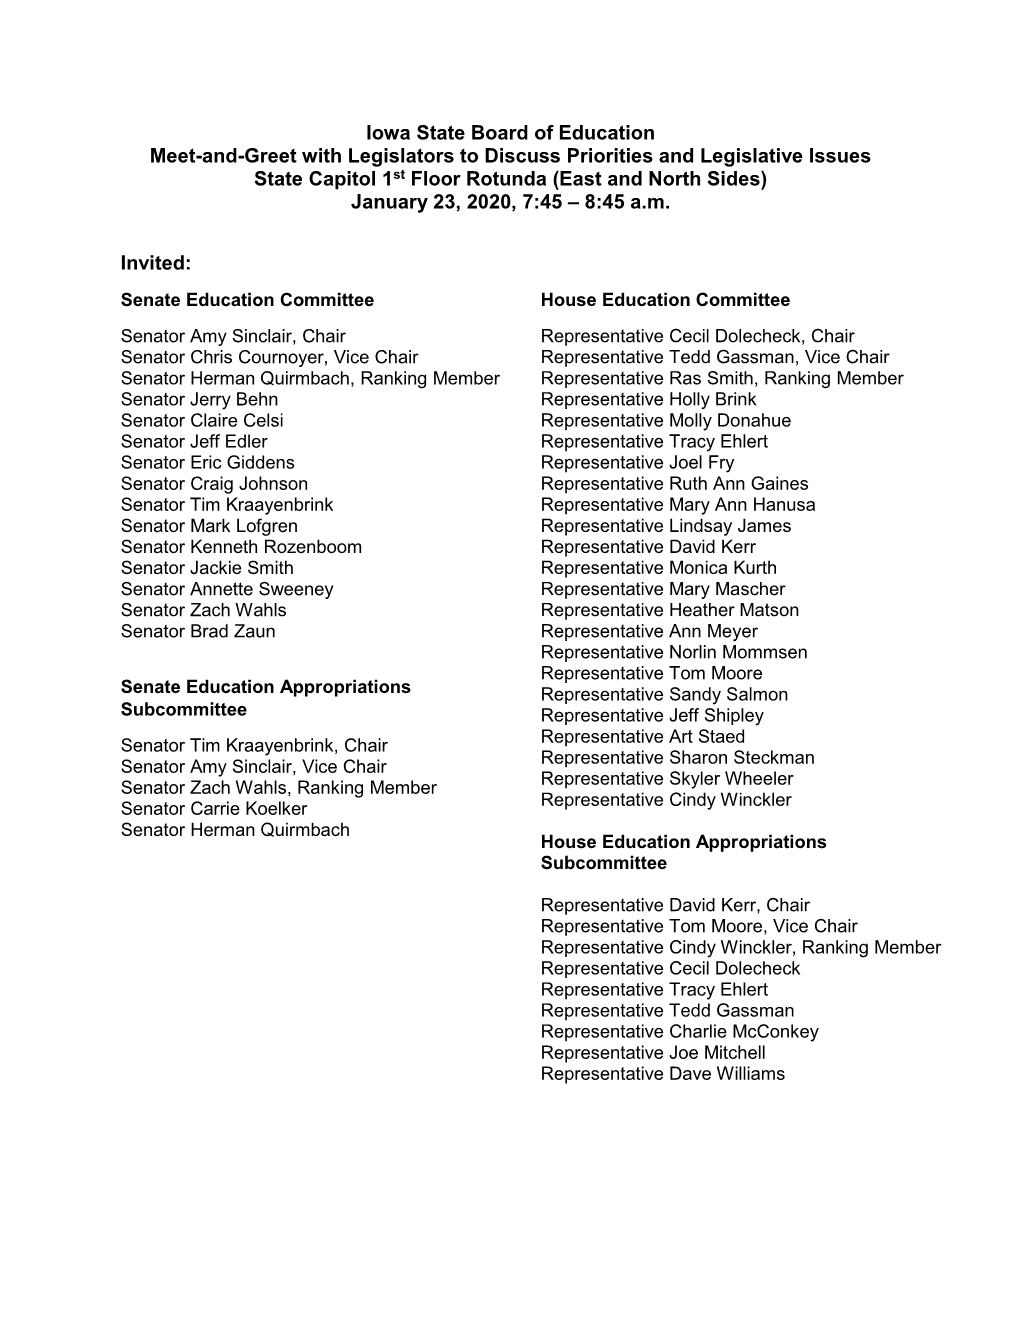 2020-01-23 State Board Invited Legislators